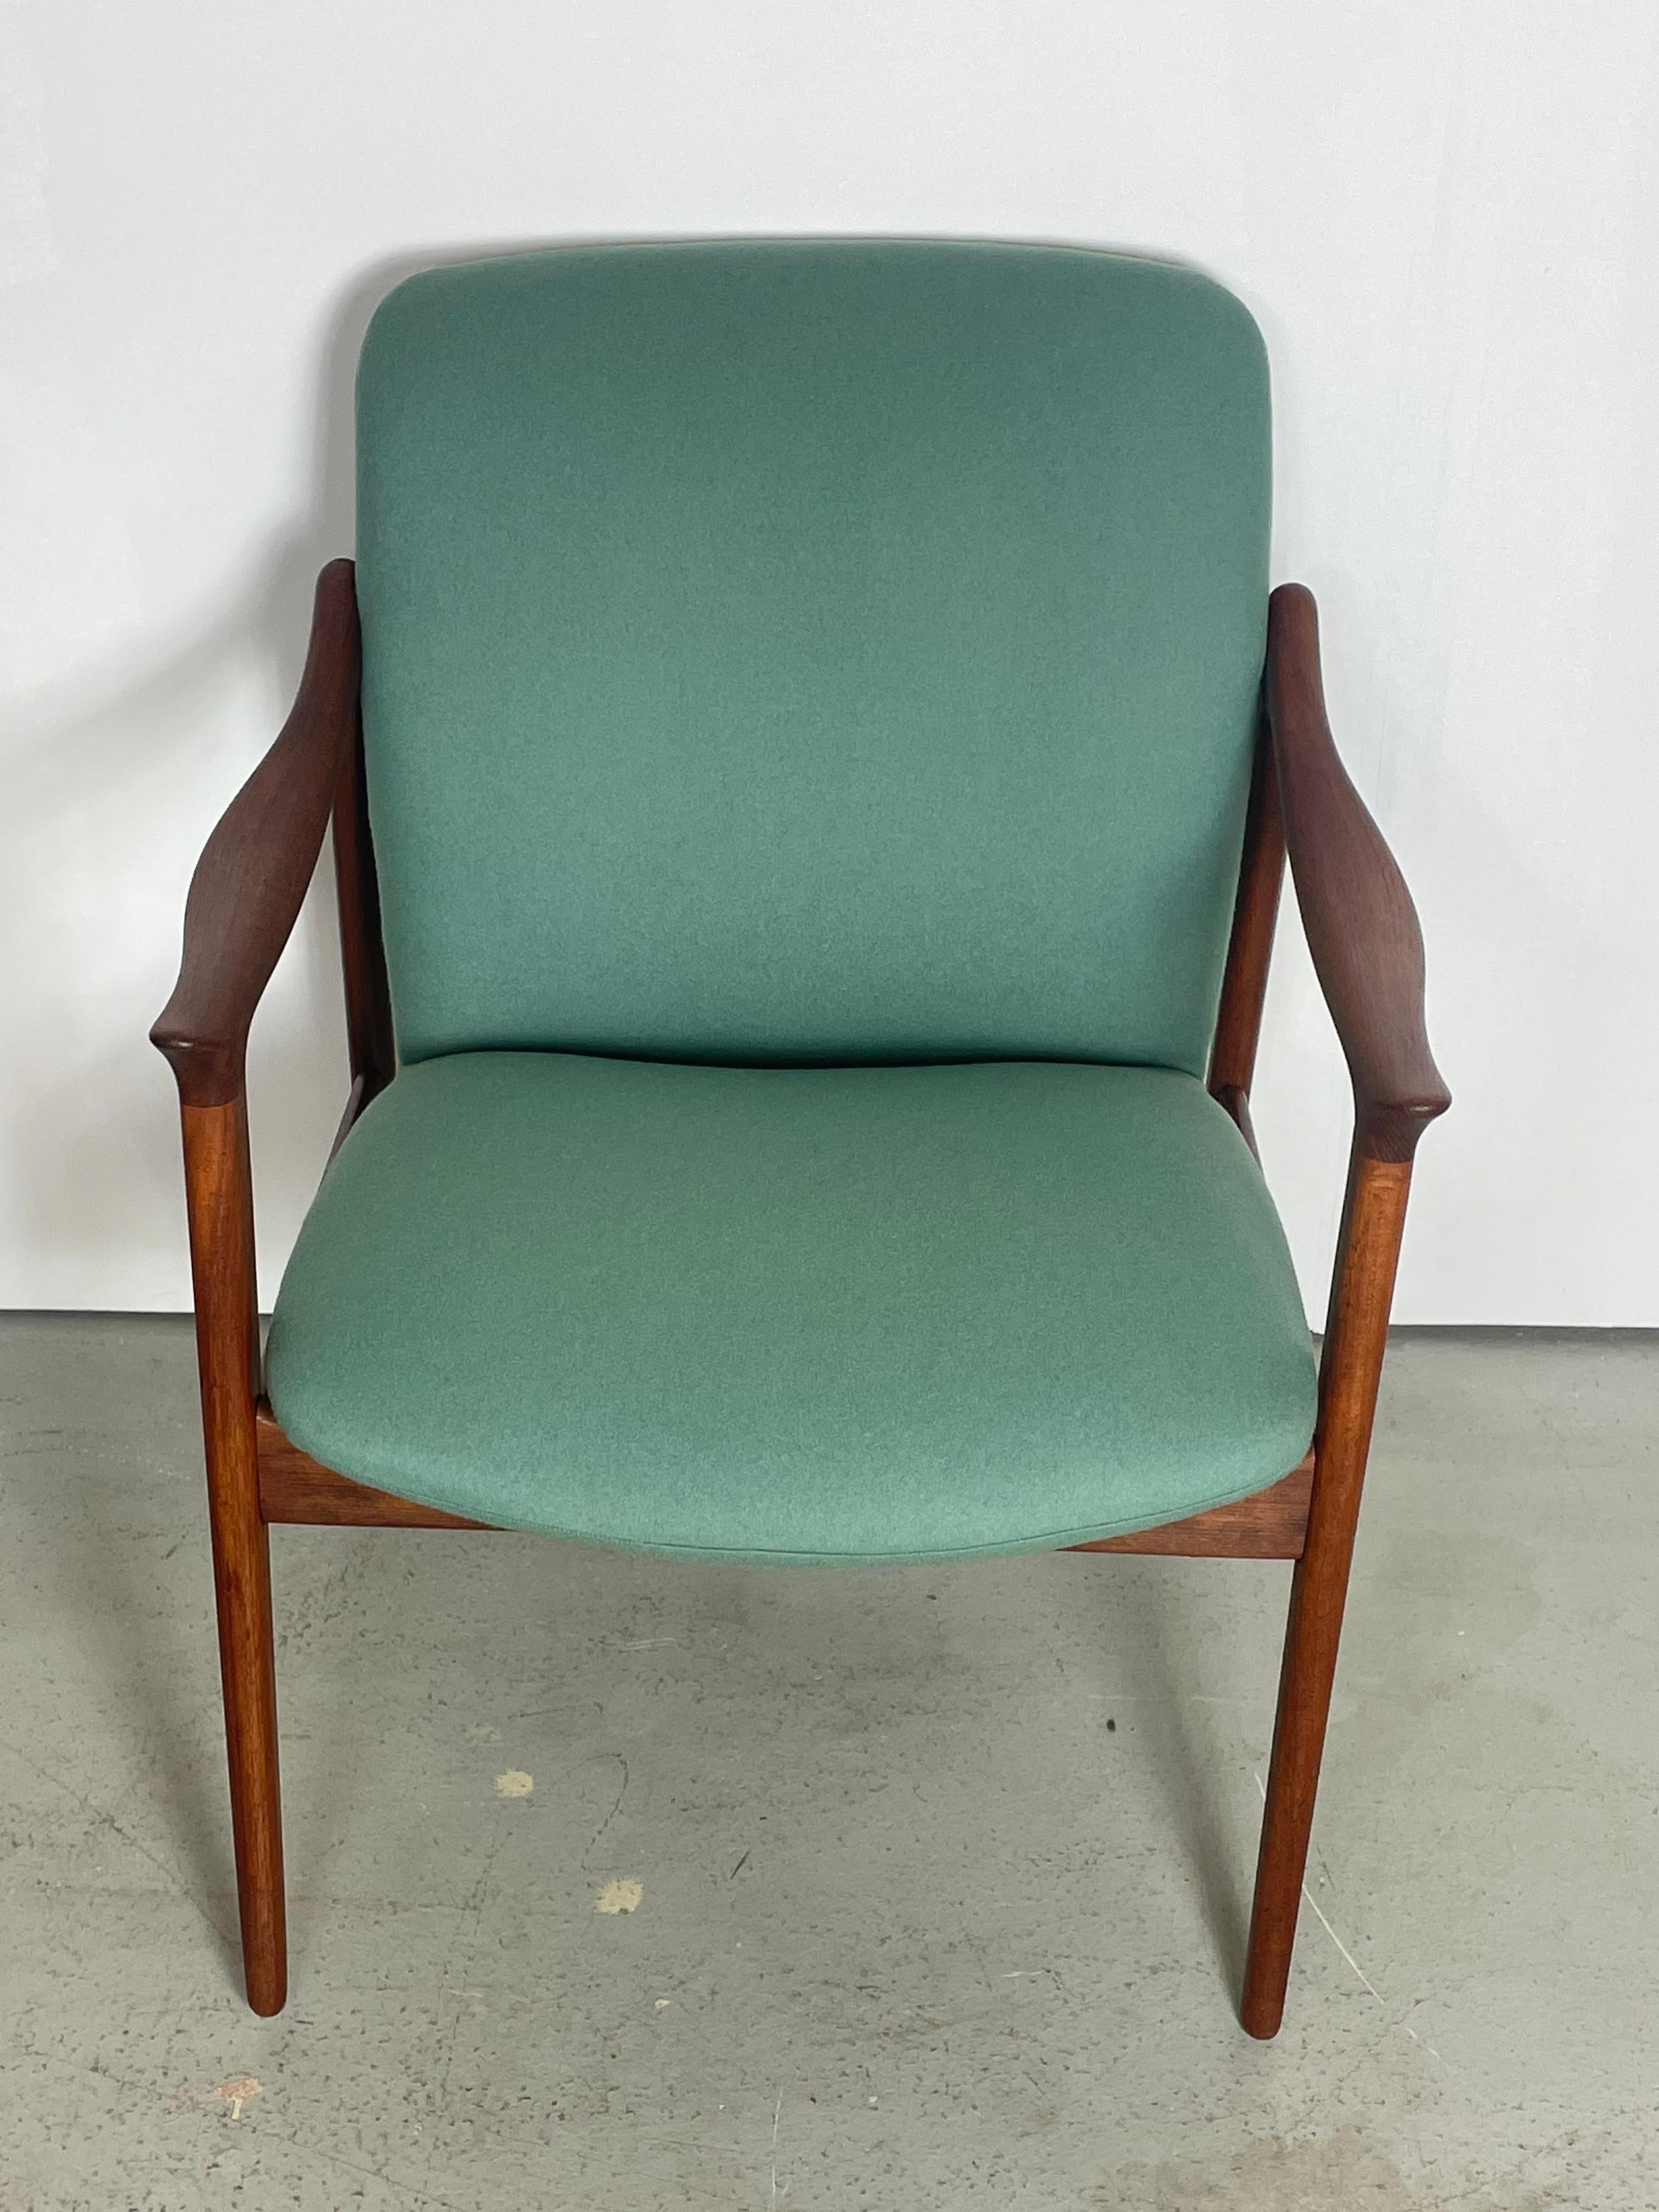 Nordic Teak Arm Chair by Fredrik A. Kayser, 1950s For Sale 2